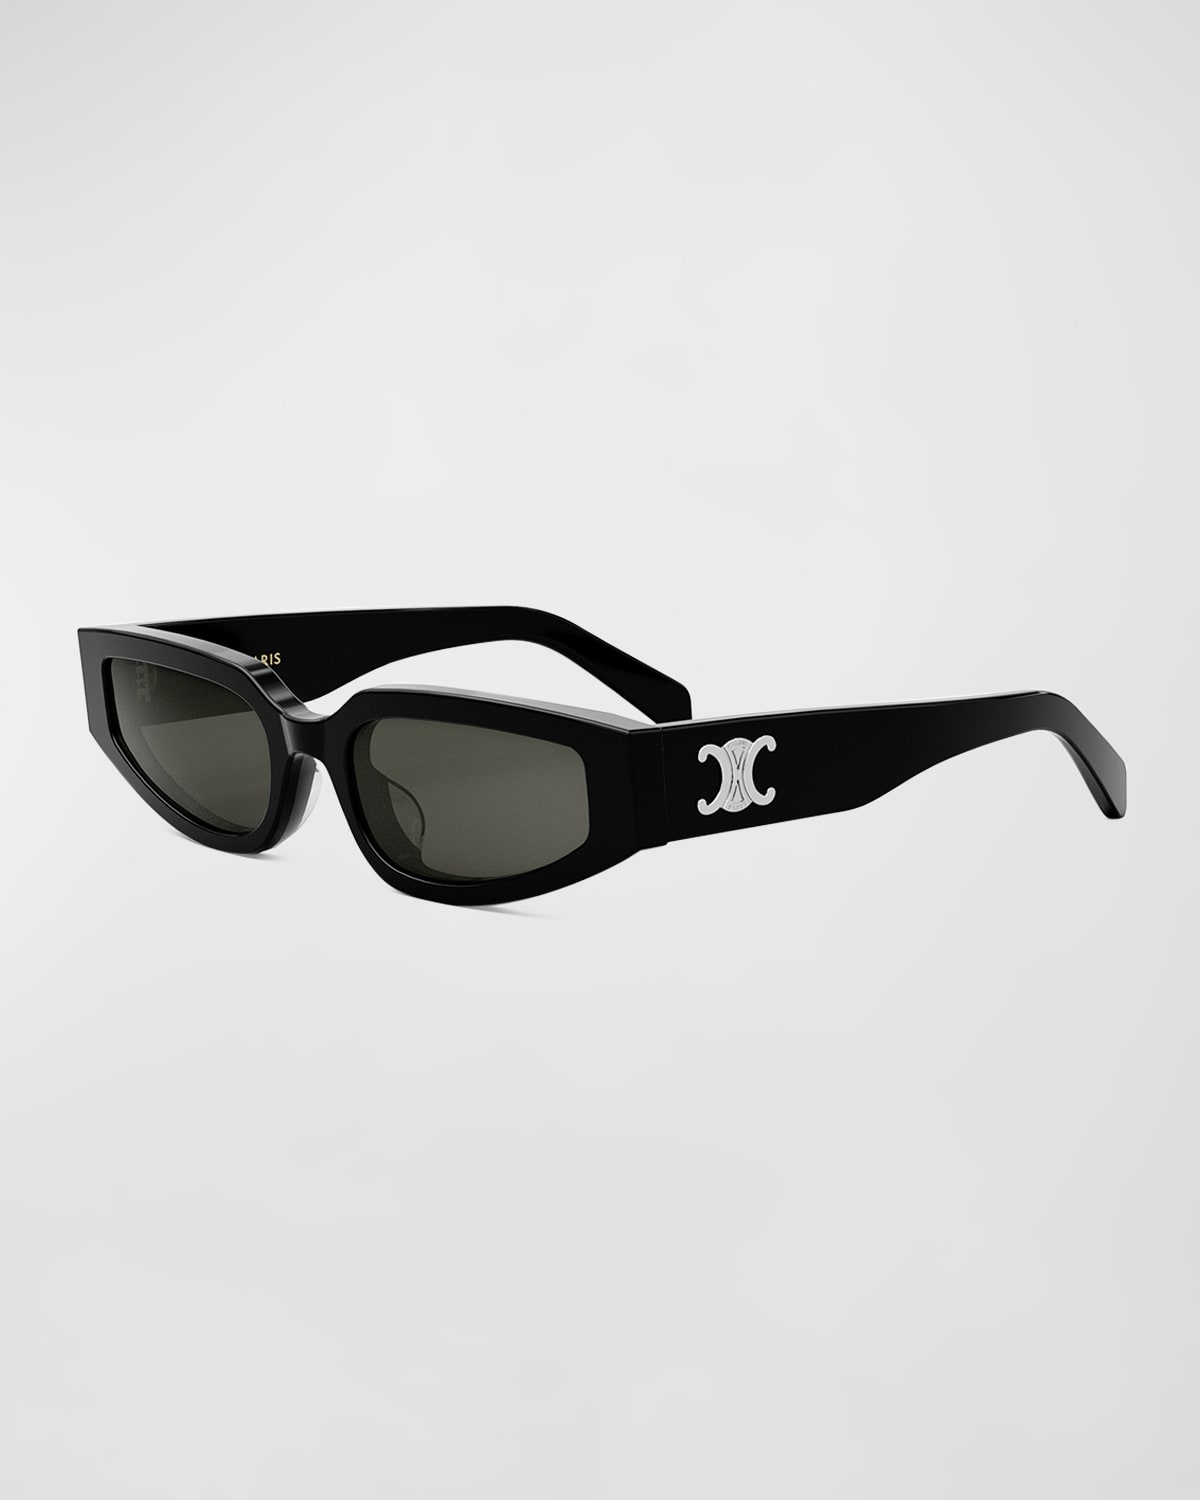 Louis Vuitton My LV Chain Two Classique Square Sunglasses Black Plastic. Size U